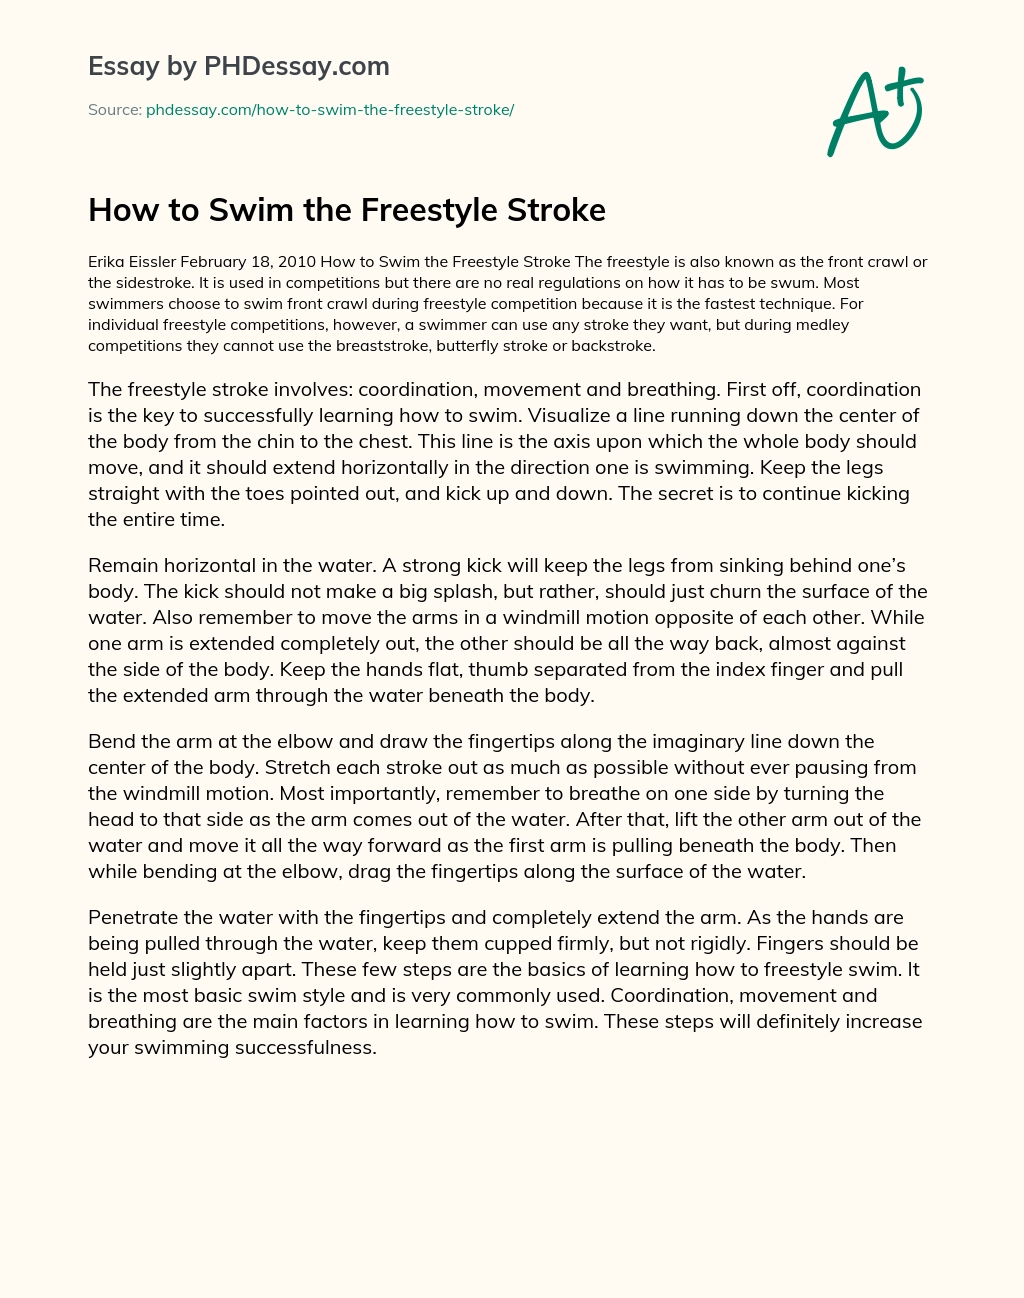 How to Swim the Freestyle Stroke essay